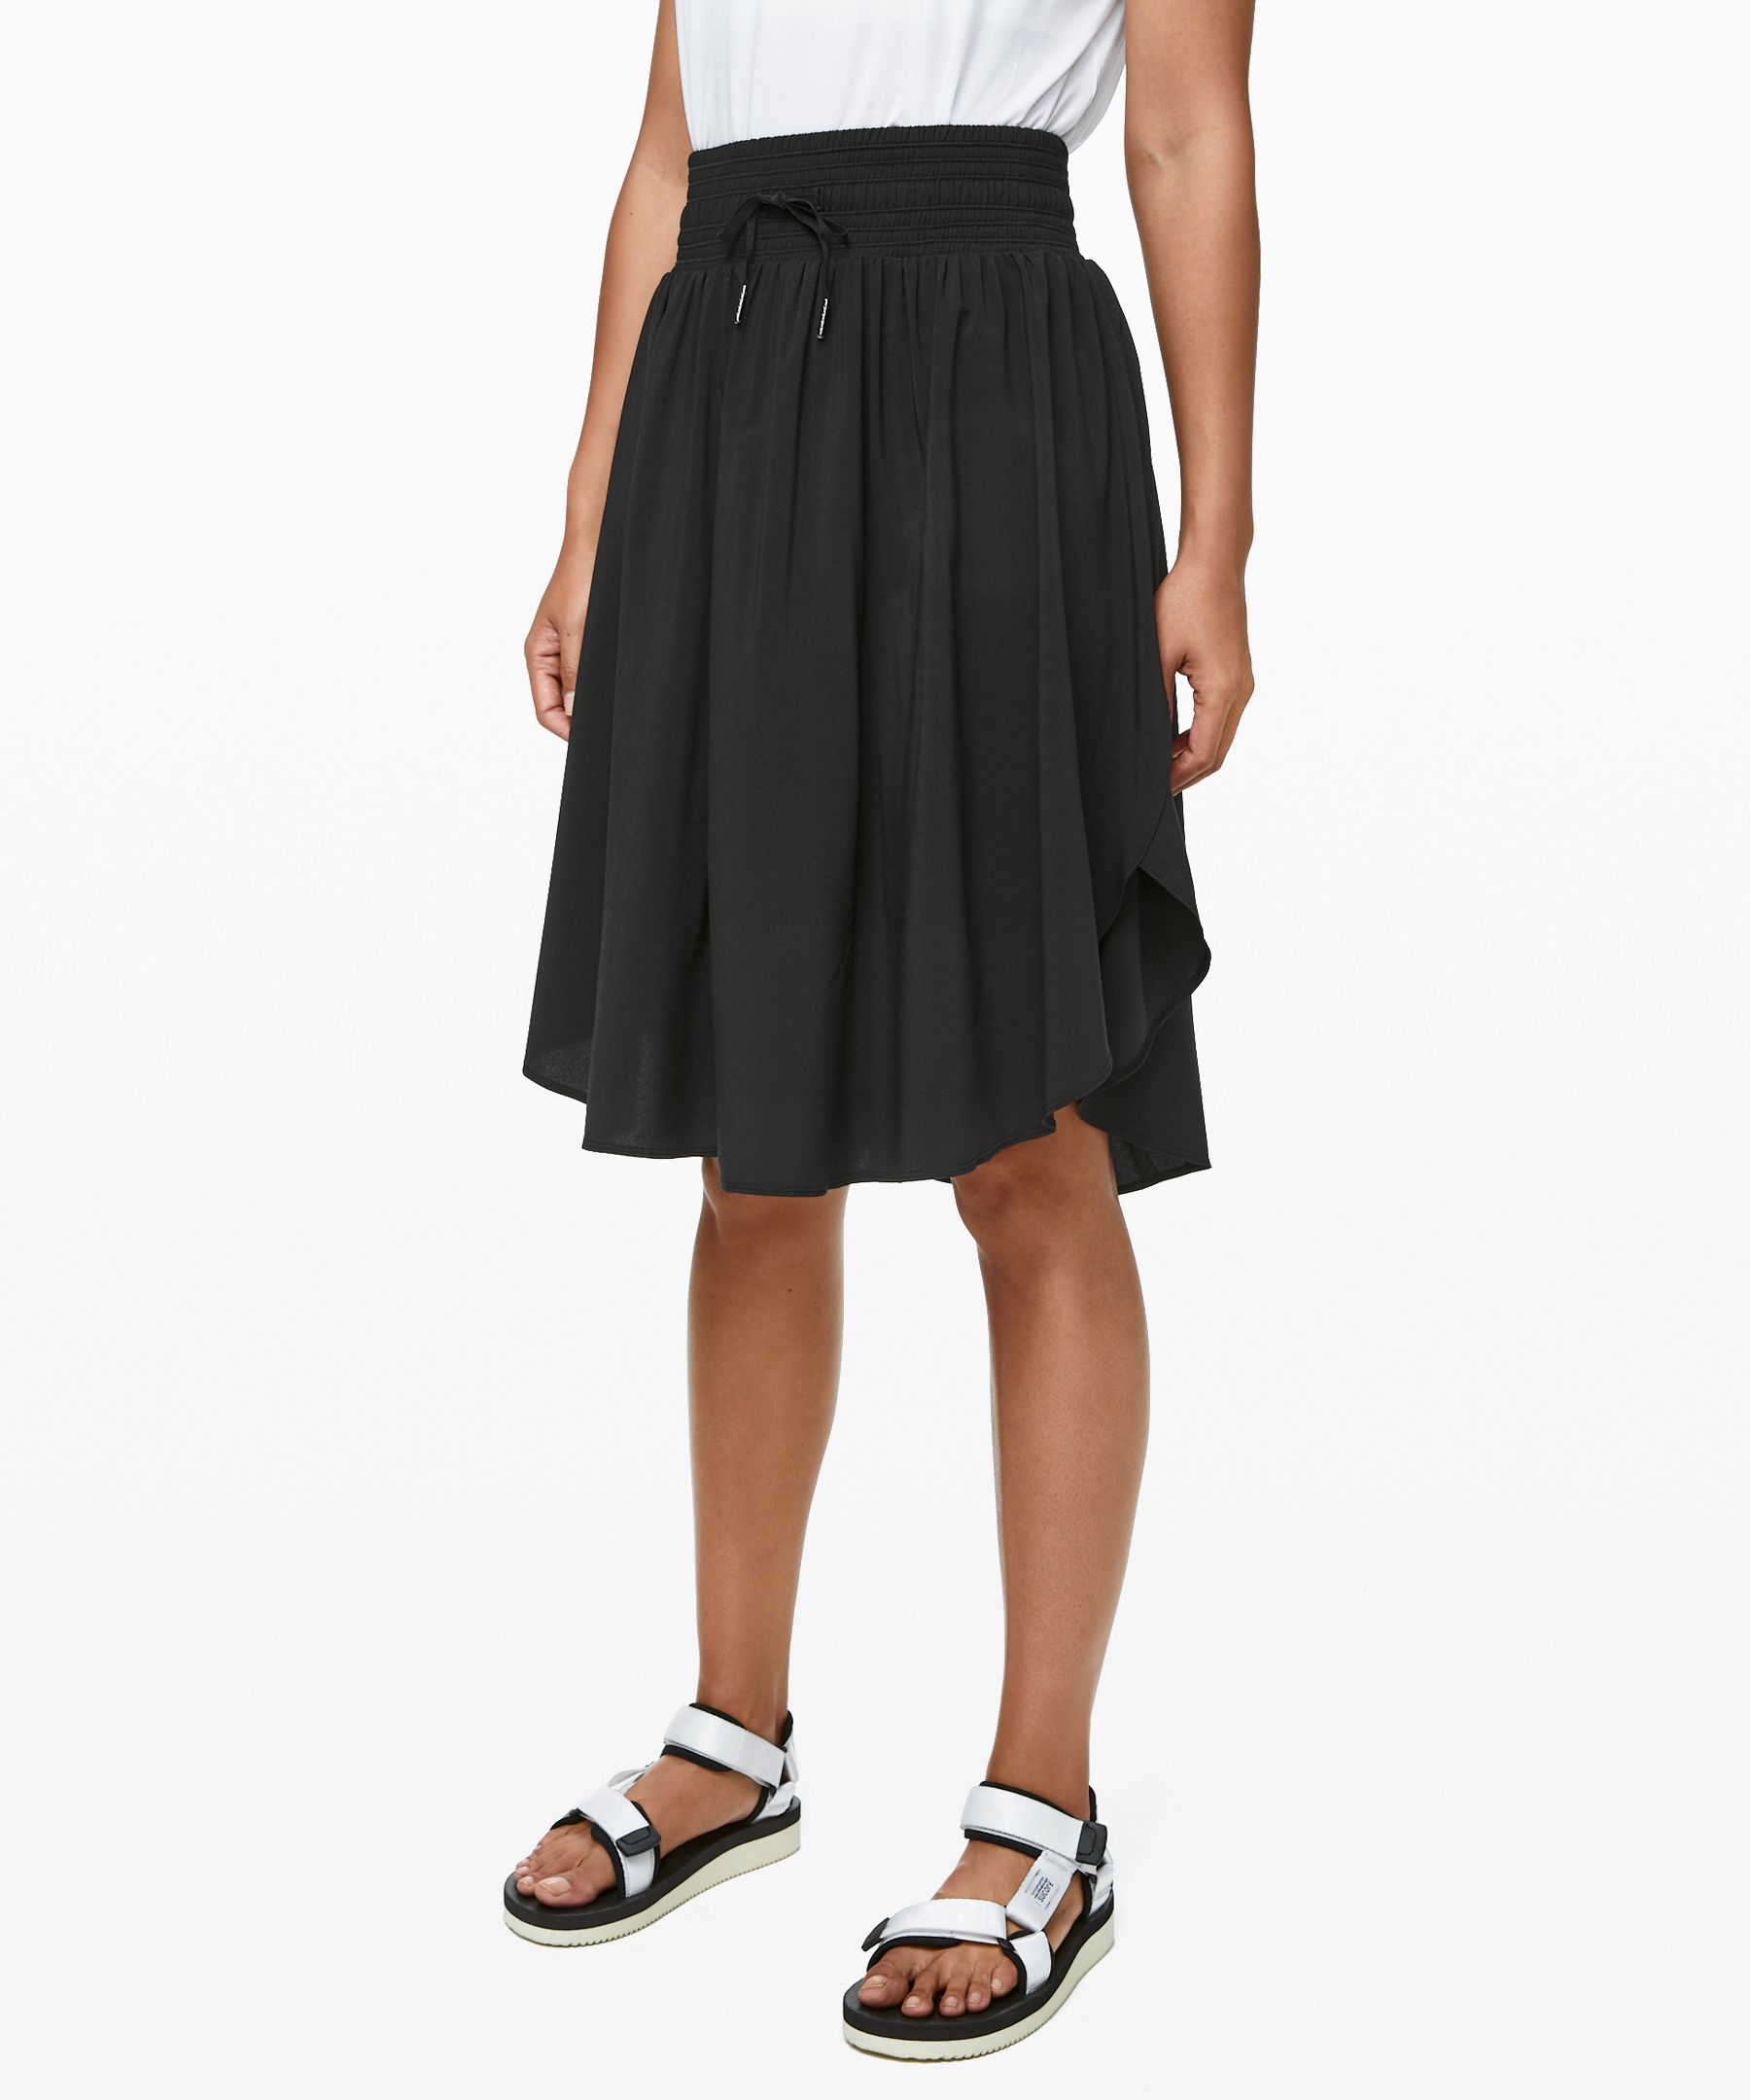 lululemon skirt black